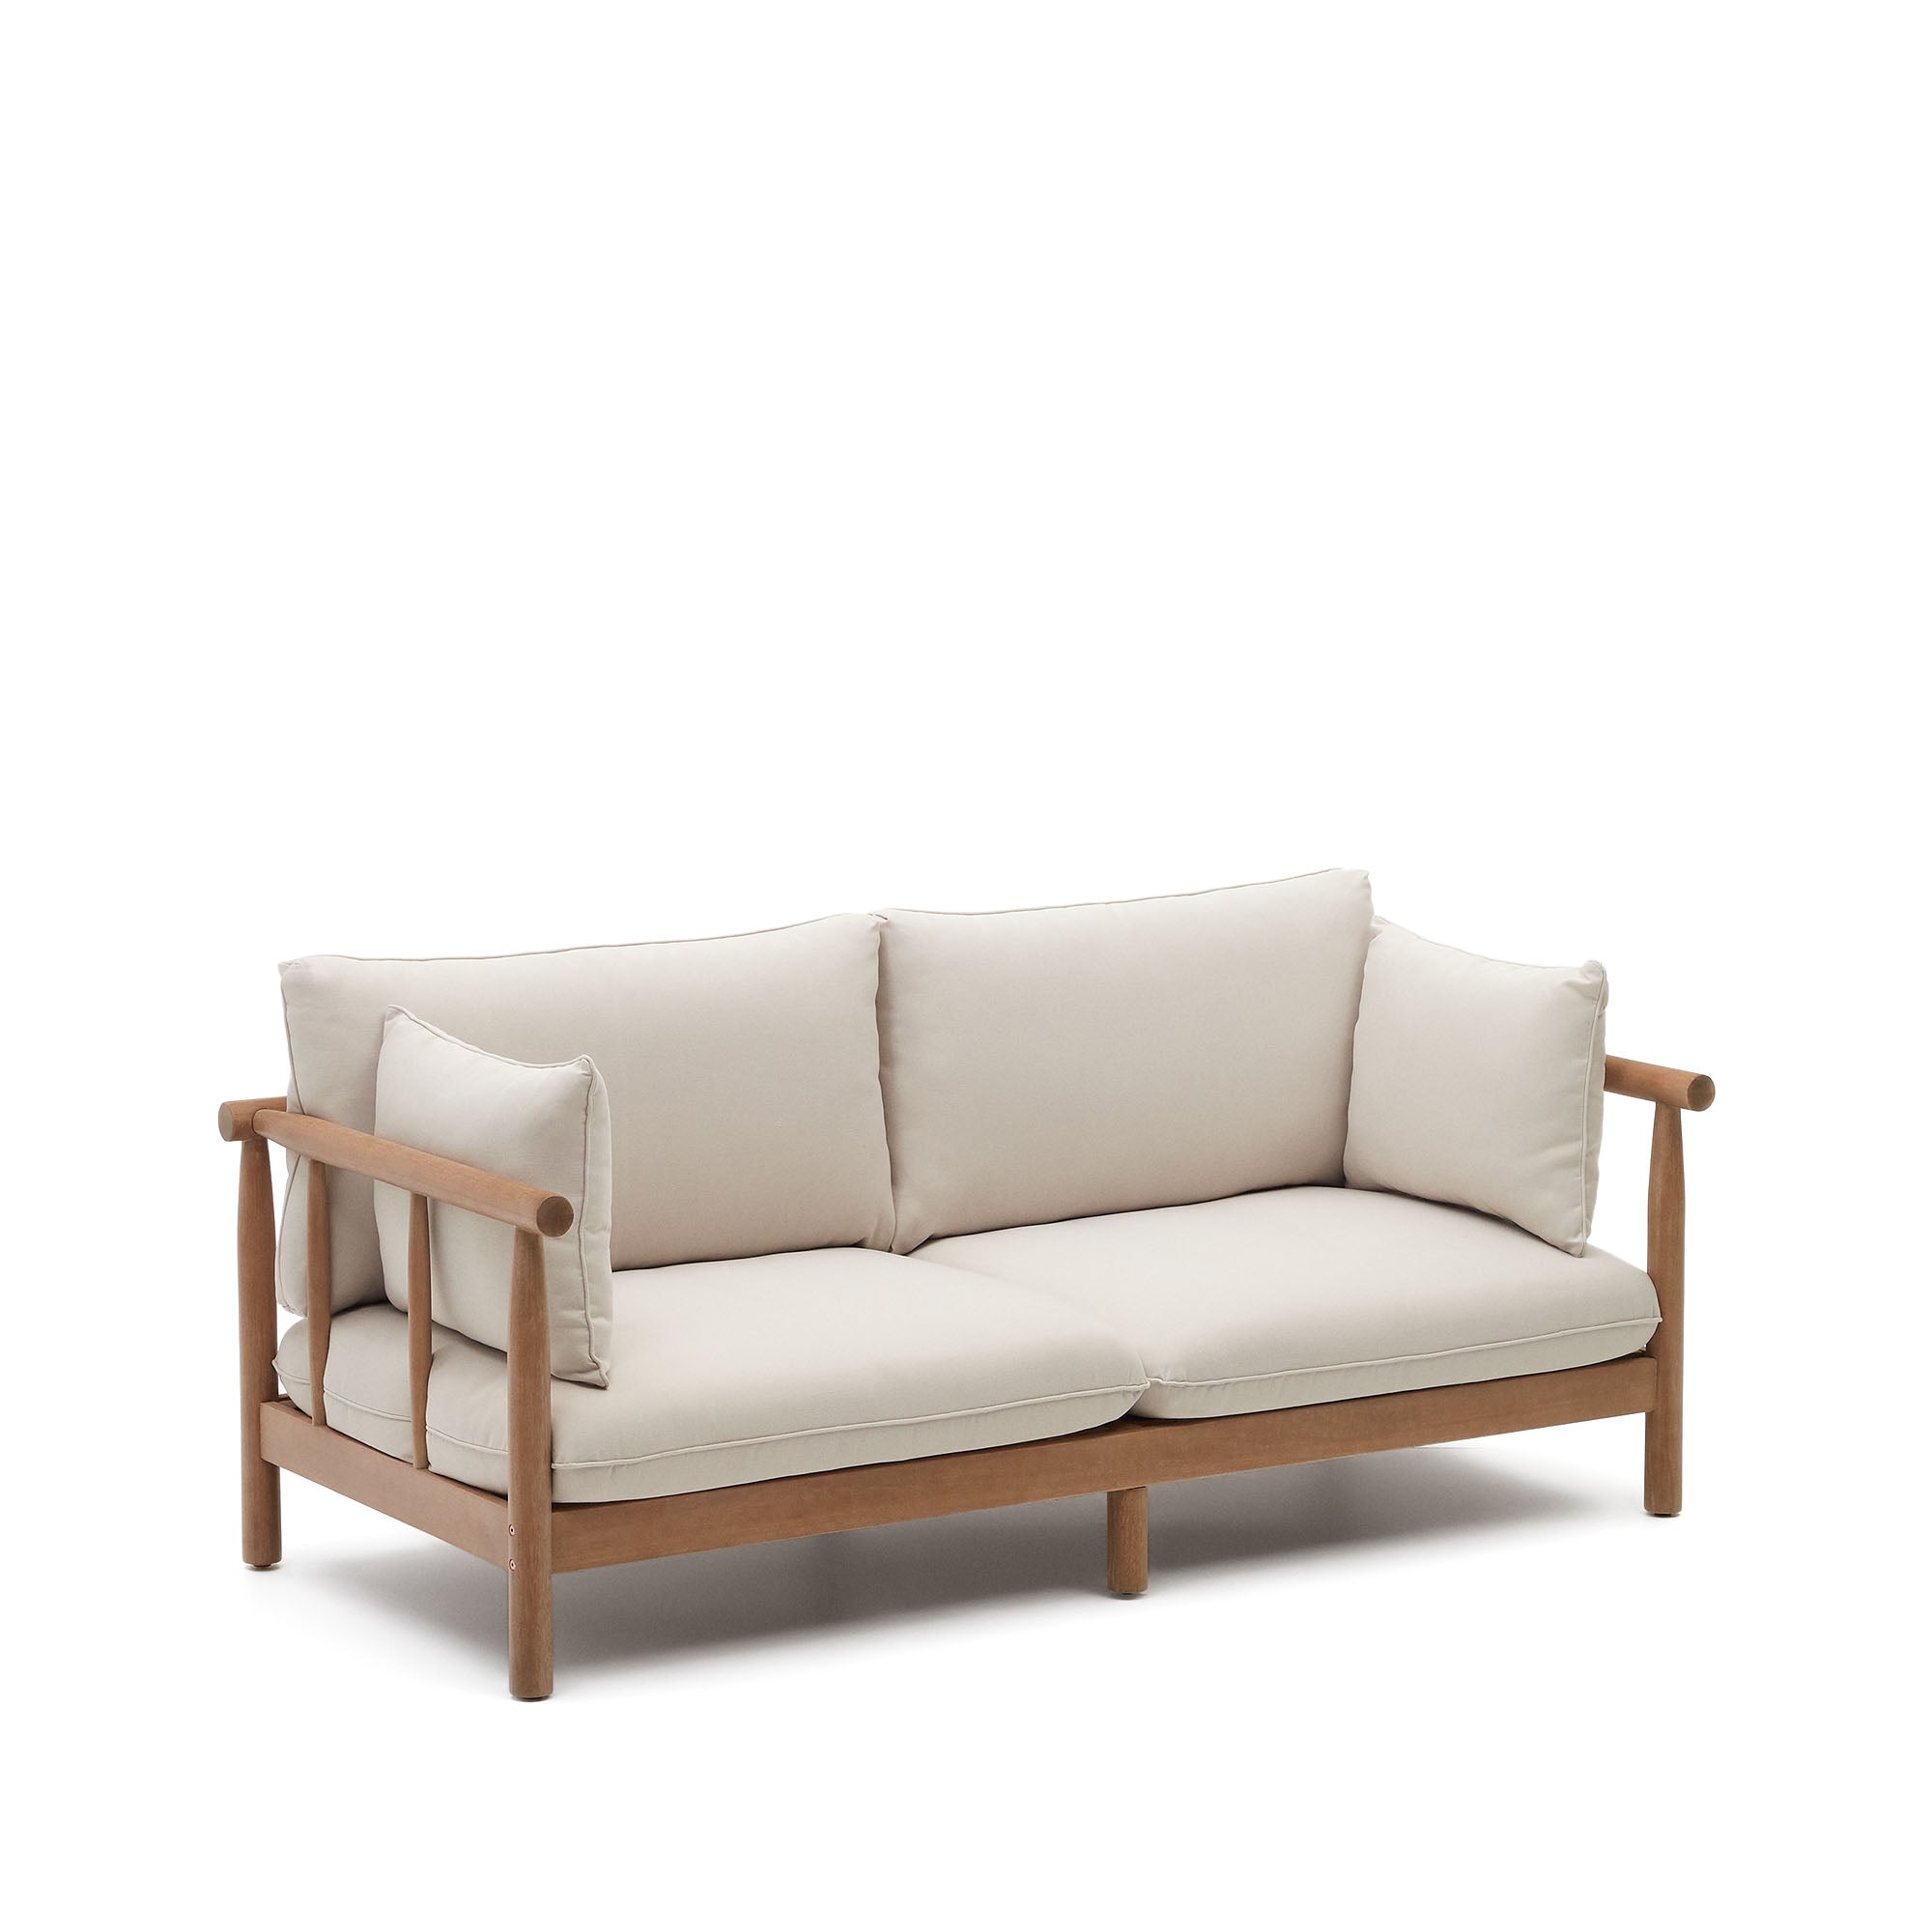 Sacova 2 seater sofa, made from solid eucalyptus wood 195 cm